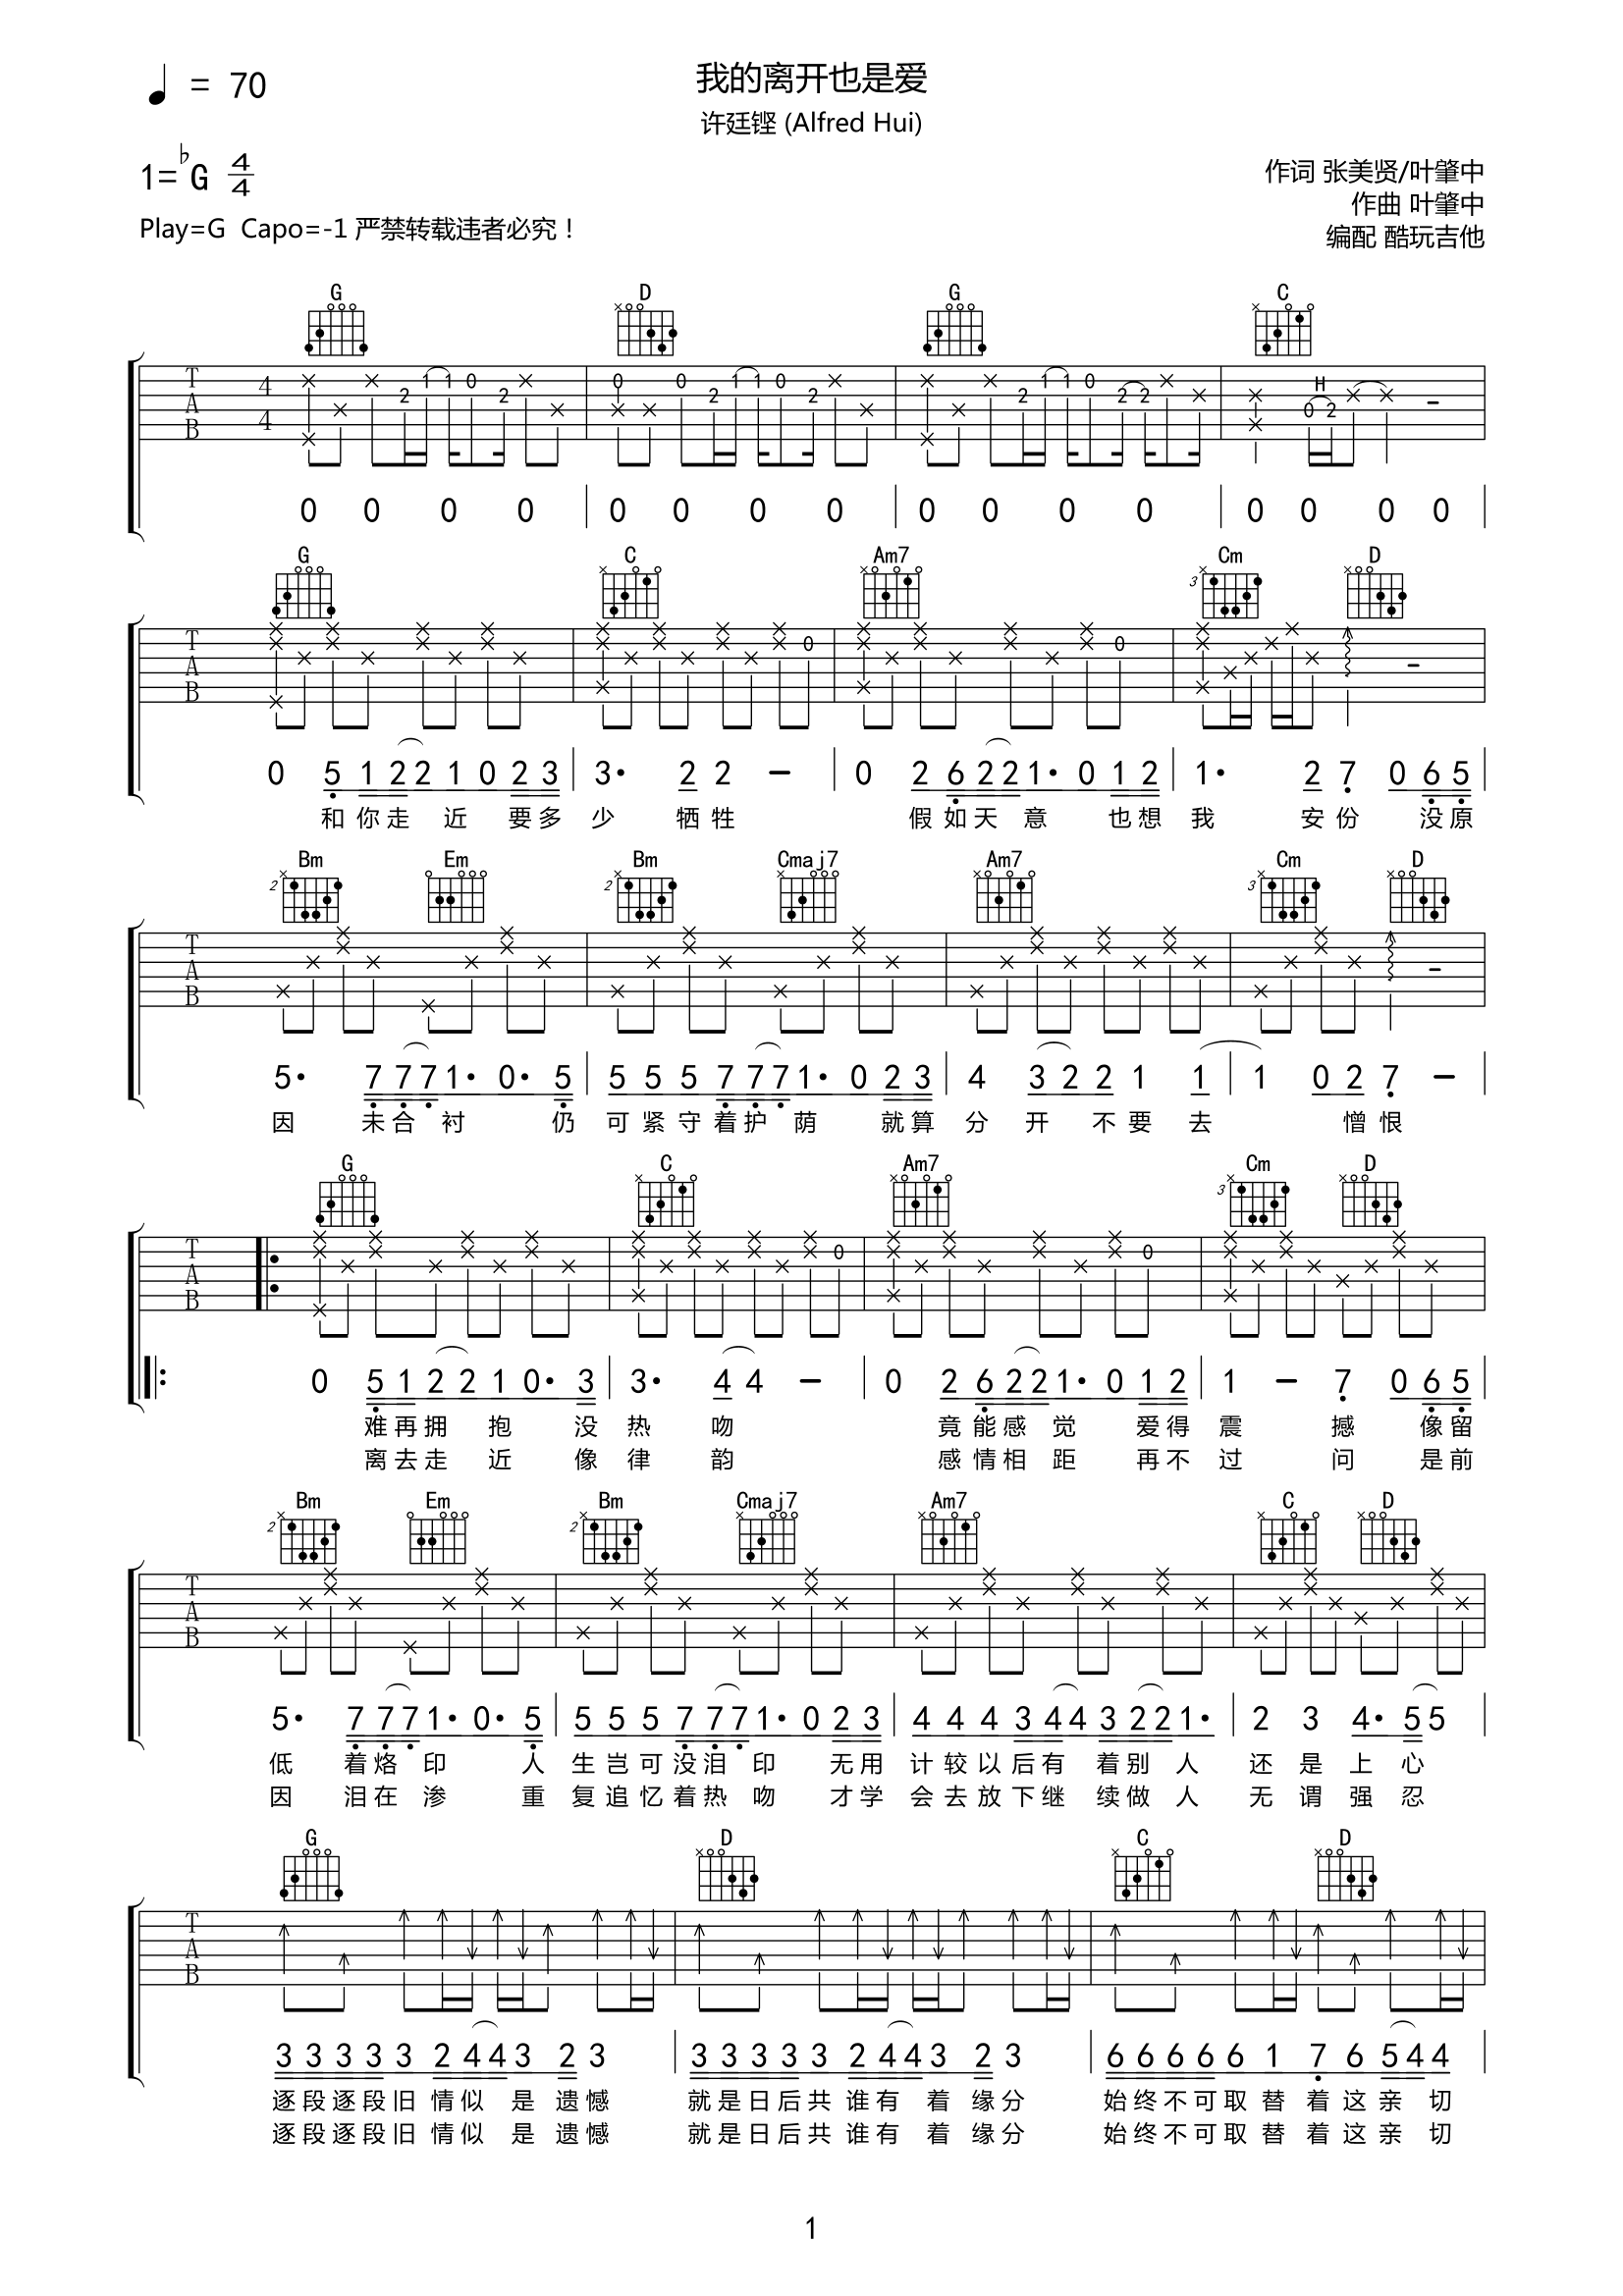 innocence partitura piano, Avril Lavigne: sheet music for piano guitar ...